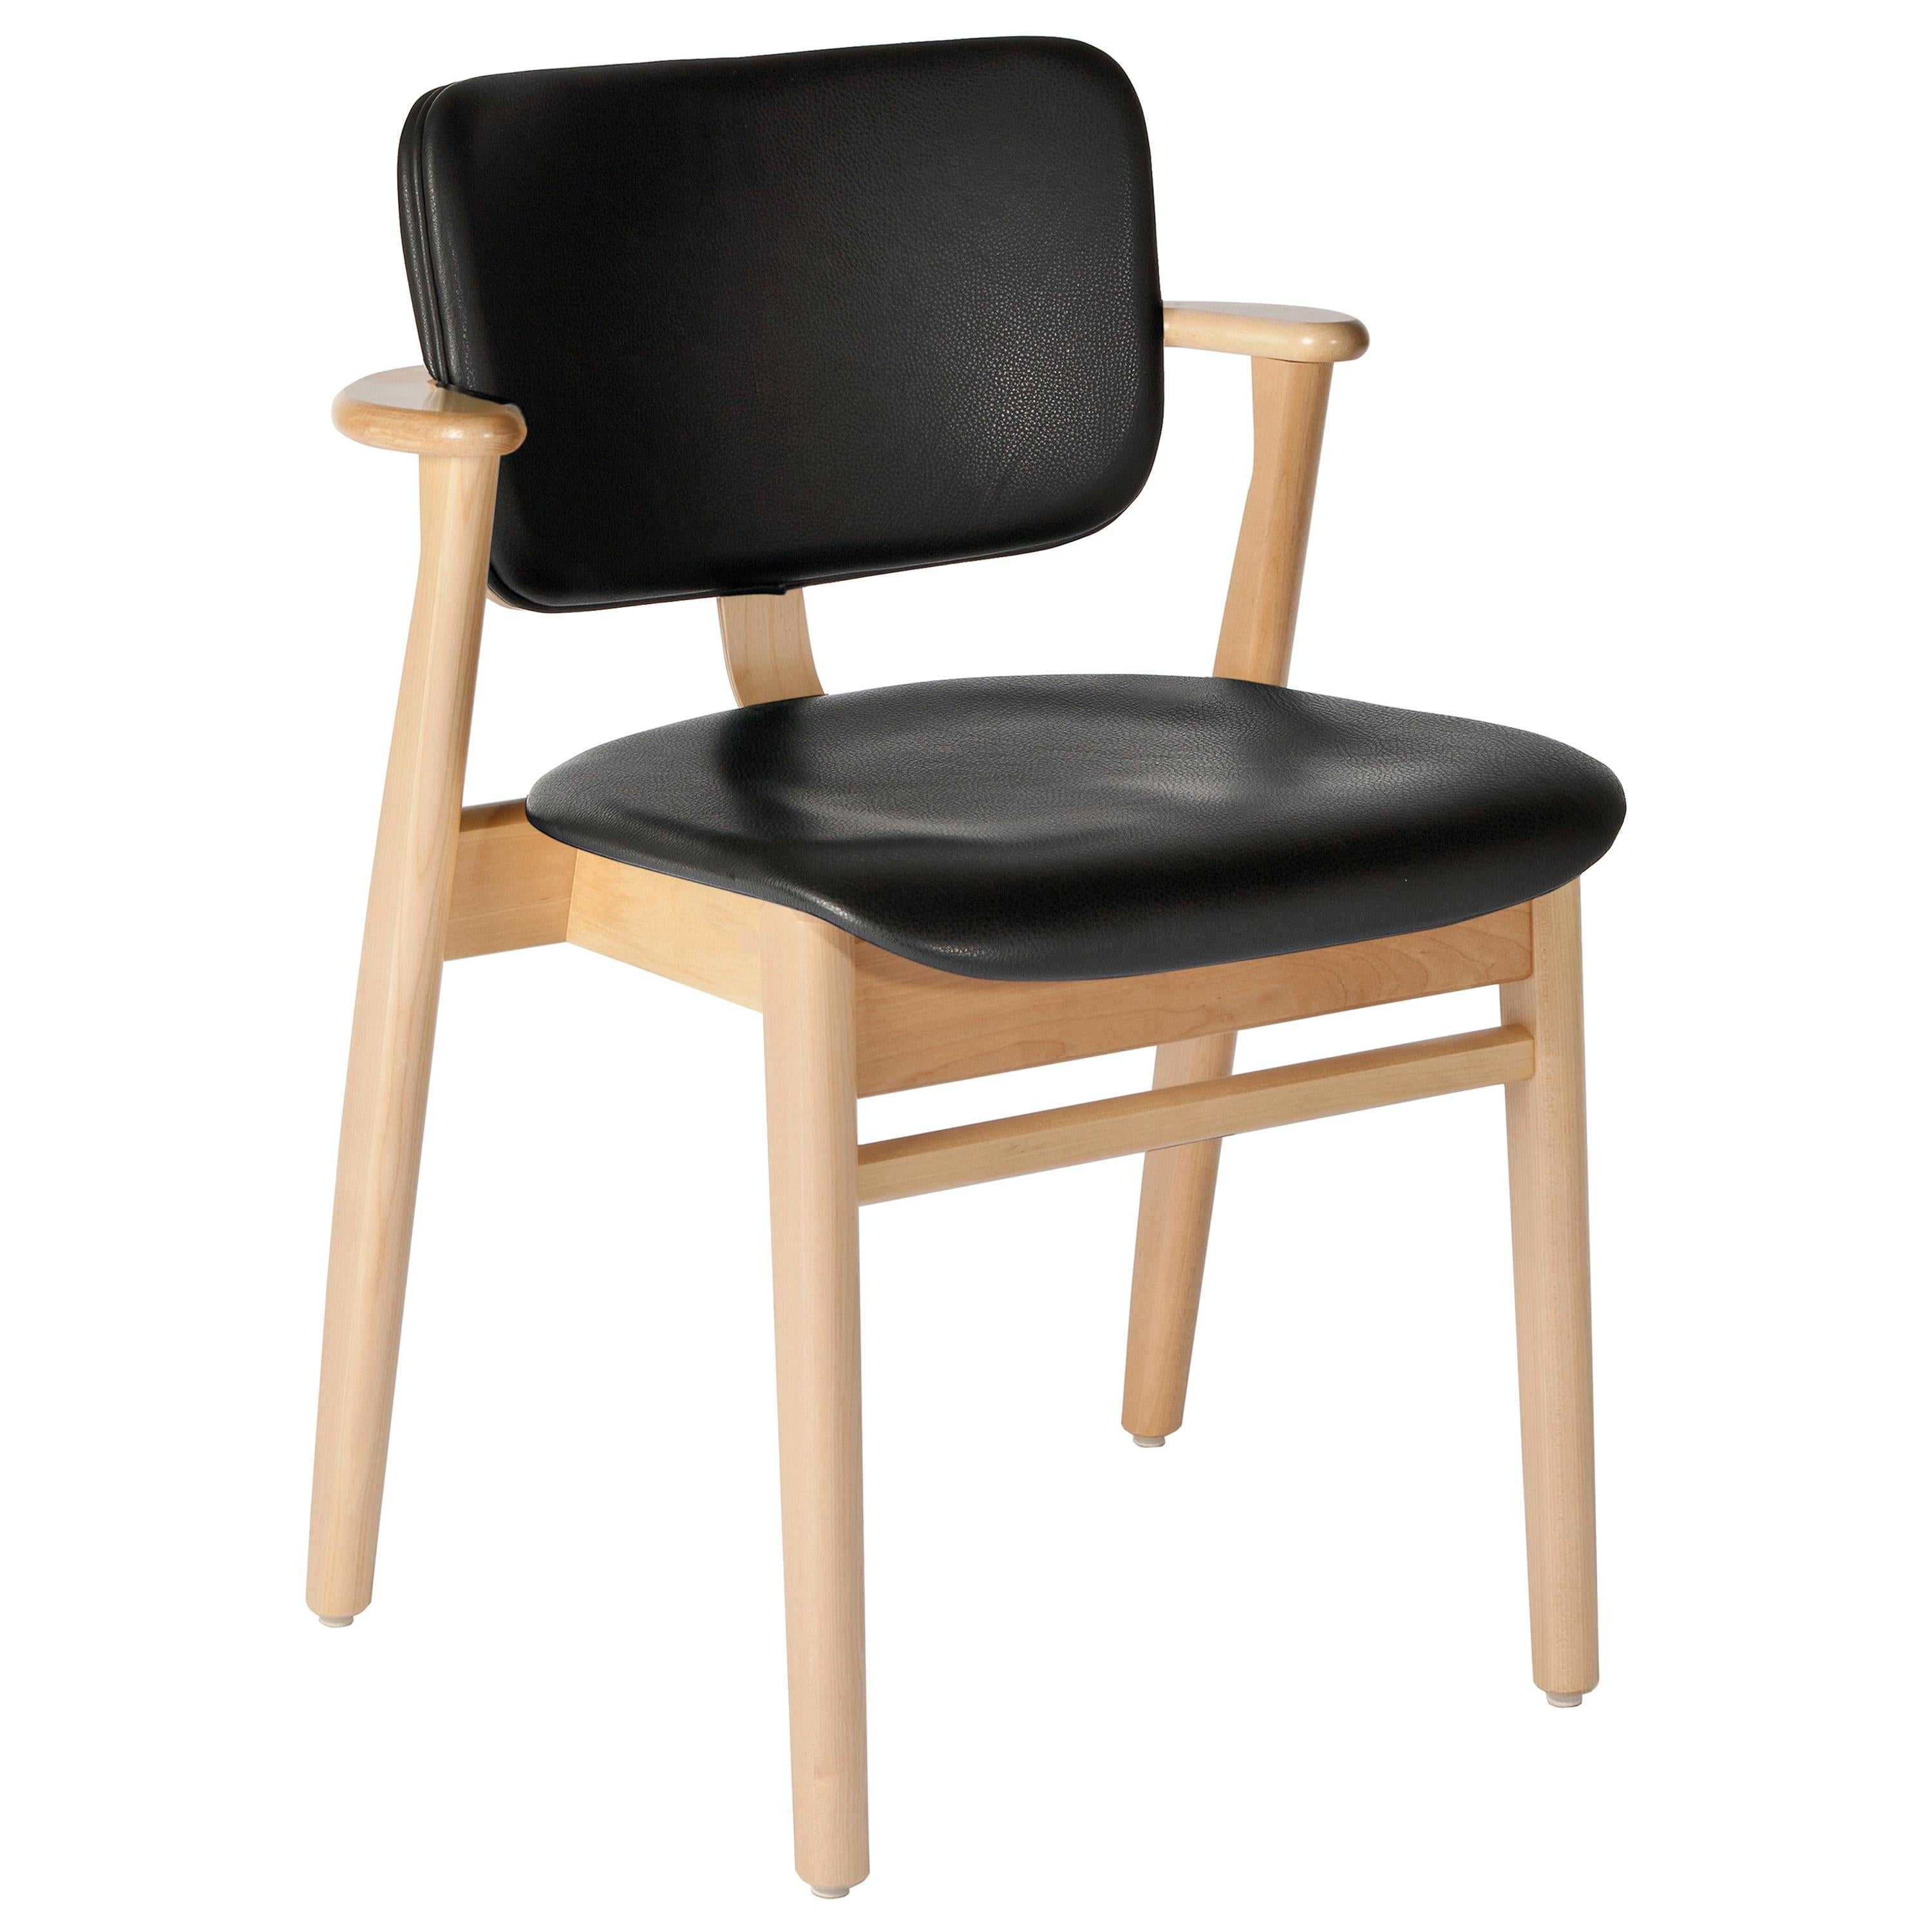  Domus Chair in Oak and Upholstered Leather by Imari Tapiovaara & Artek For Sale